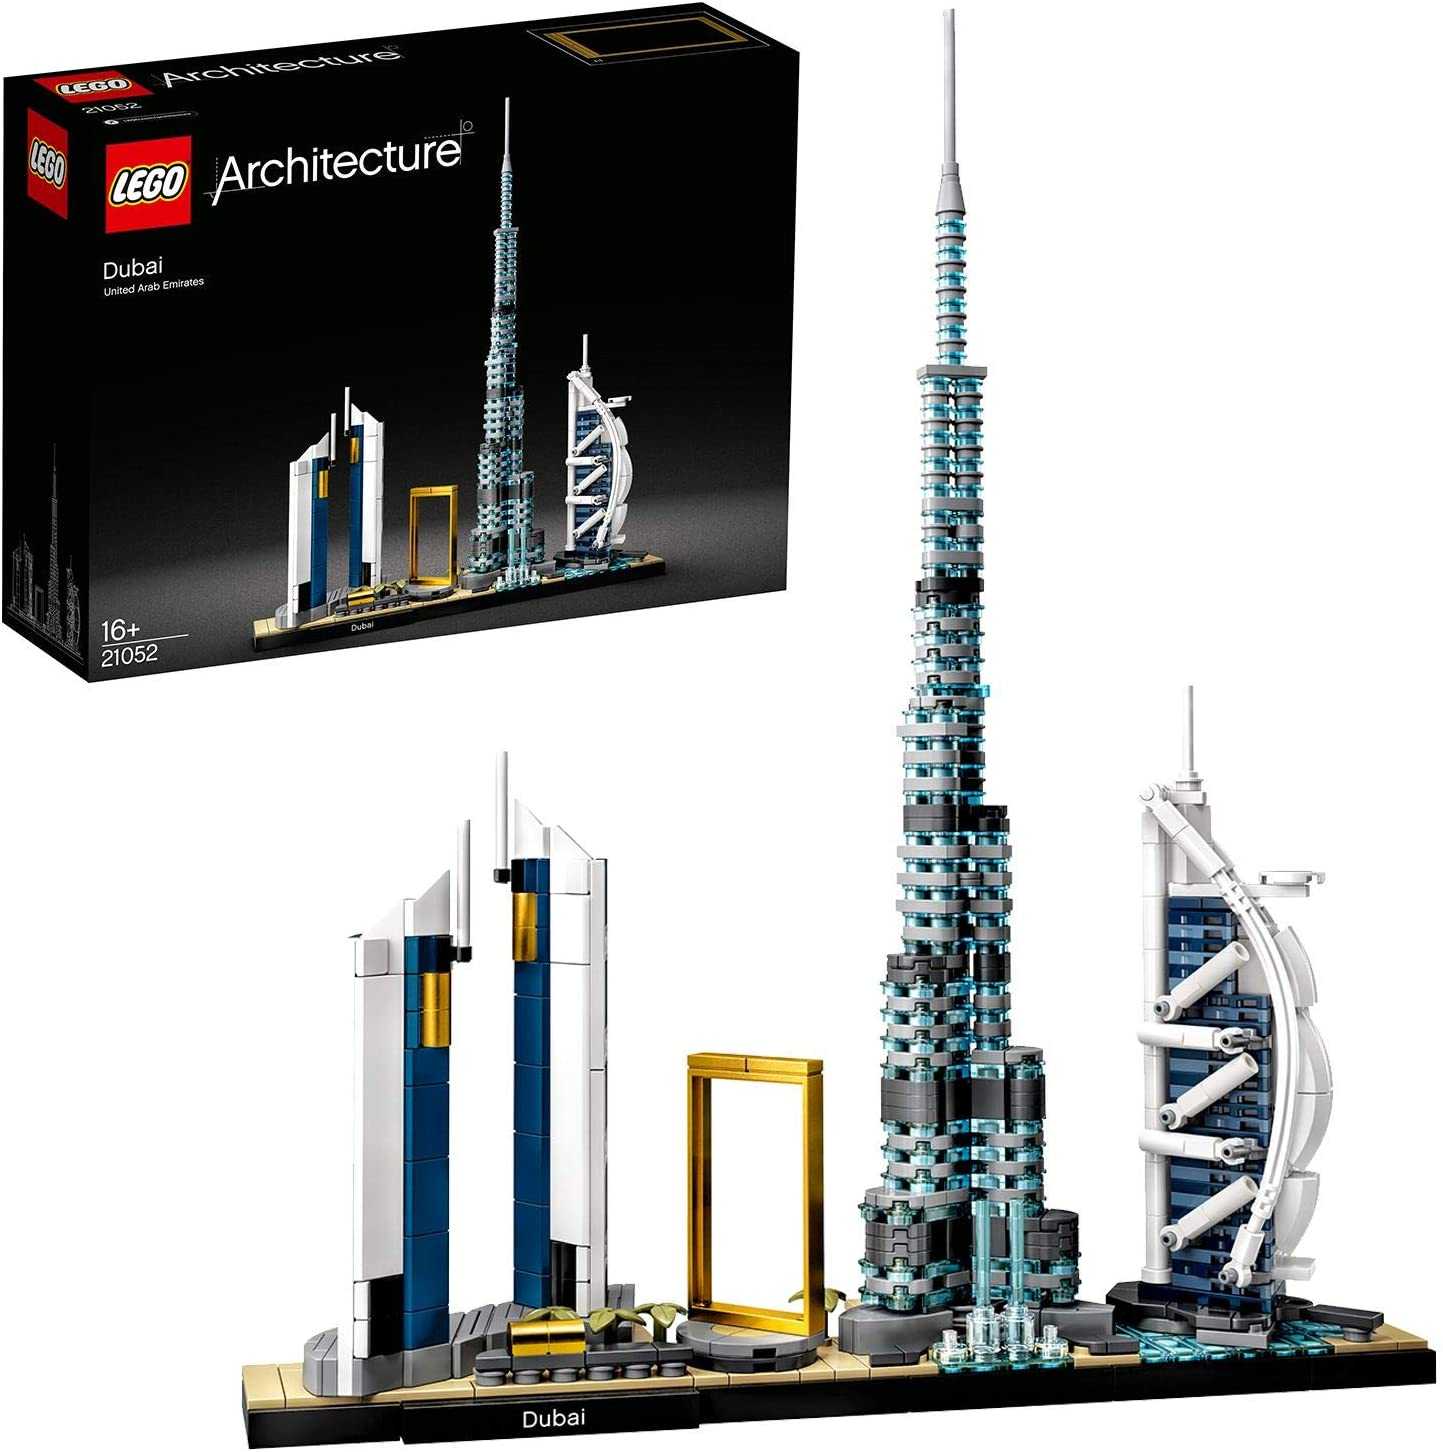 LEGO 21052 Architecture Dubai Model, Skyline Collection, Collectible Building Set